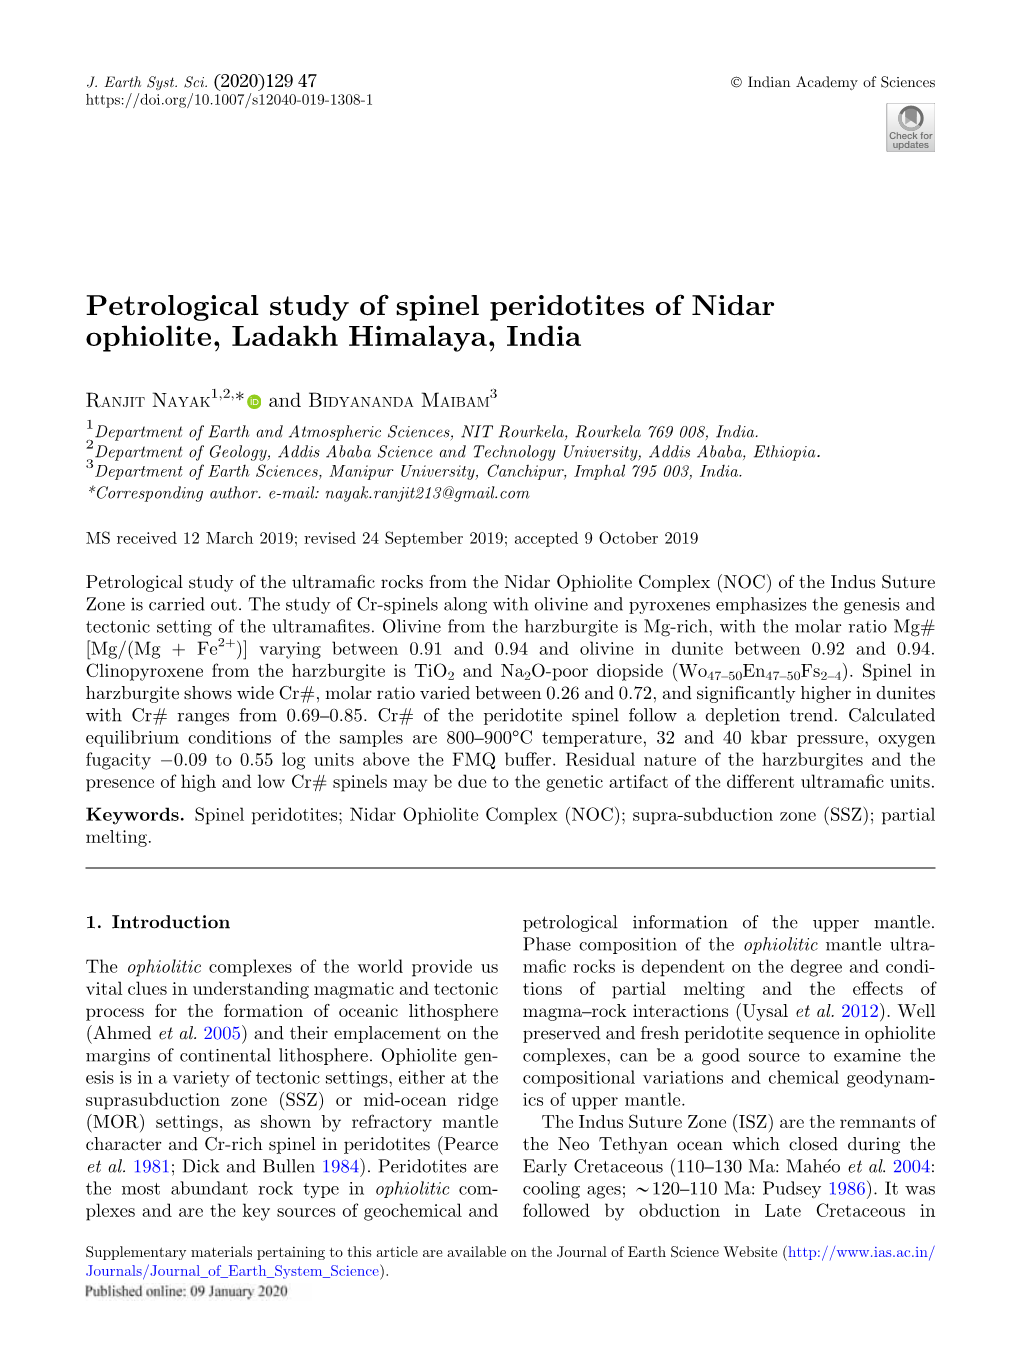 Petrological Study of Spinel Peridotites of Nidar Ophiolite, Ladakh Himalaya, India